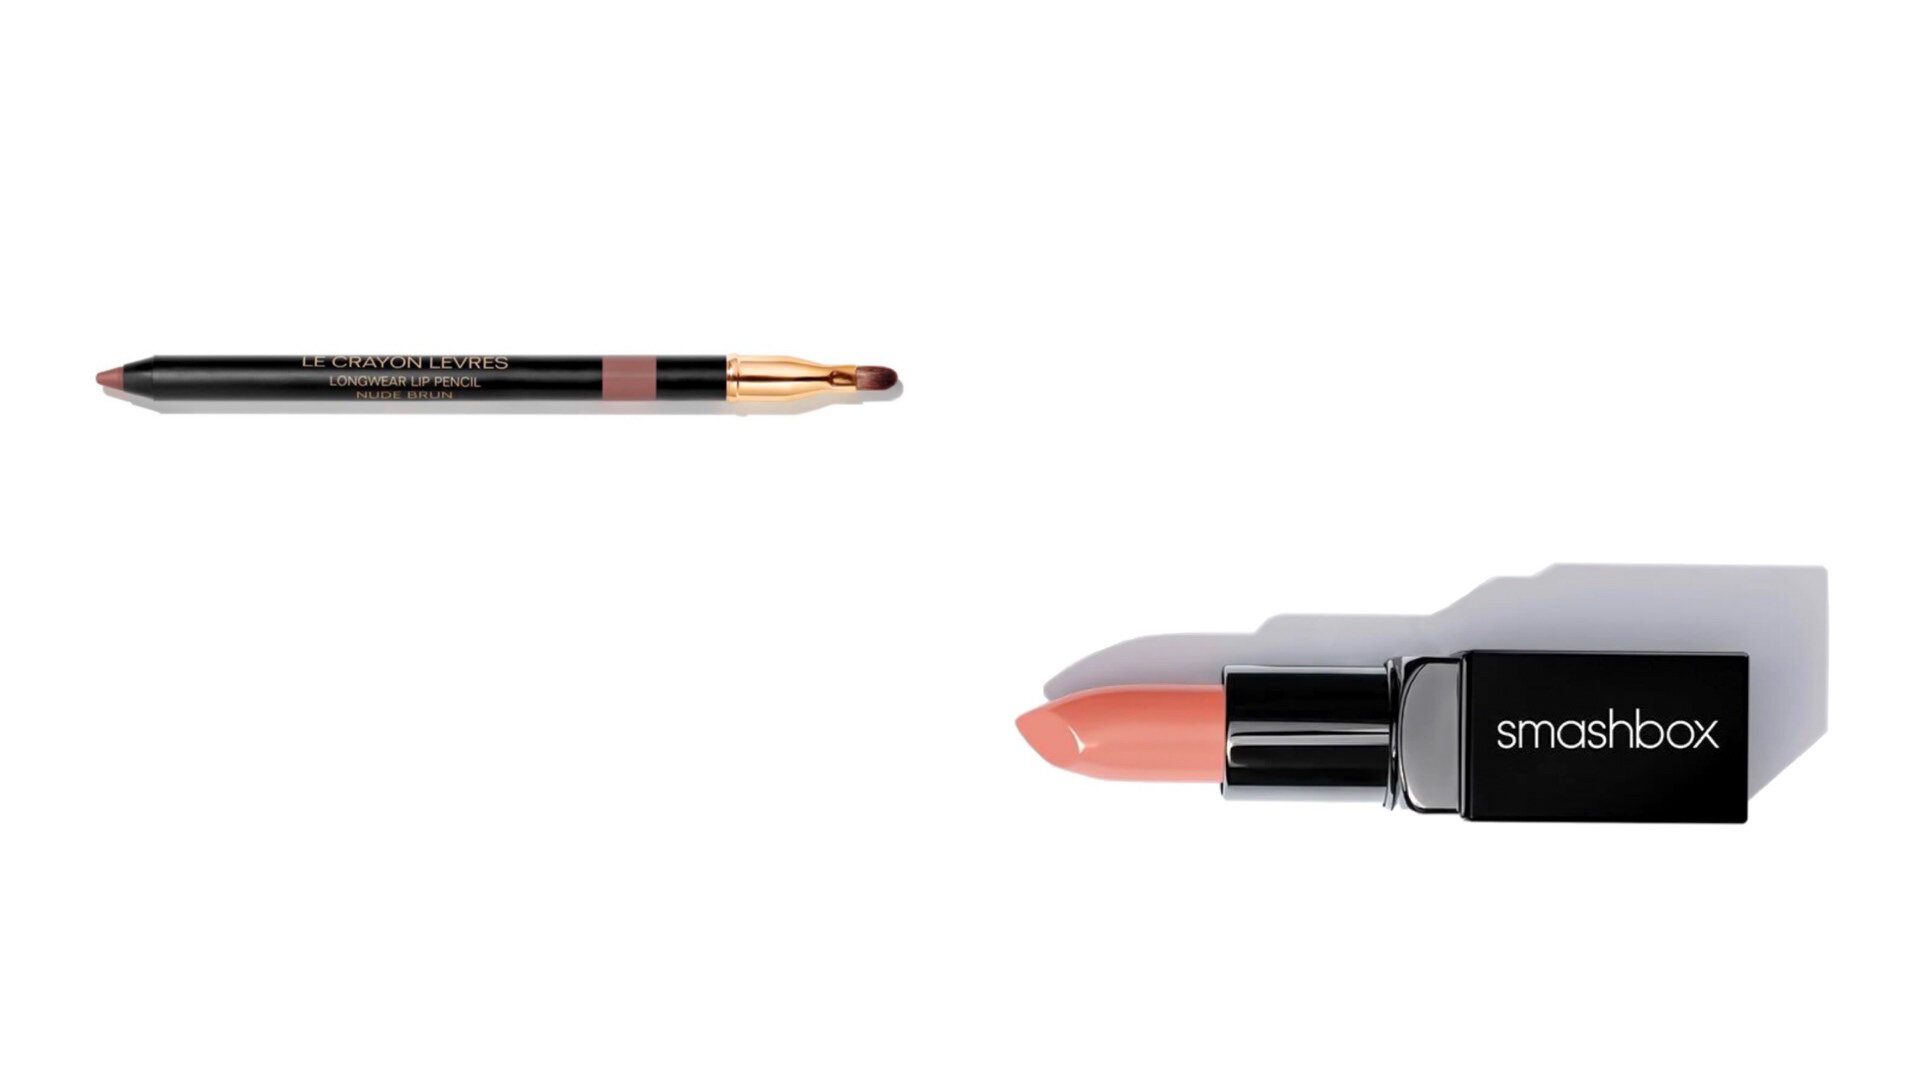 CHANEL, Makeup, Brand New Chanel Le Crayon Levres Lip Pencil 5 Mordore  Nude